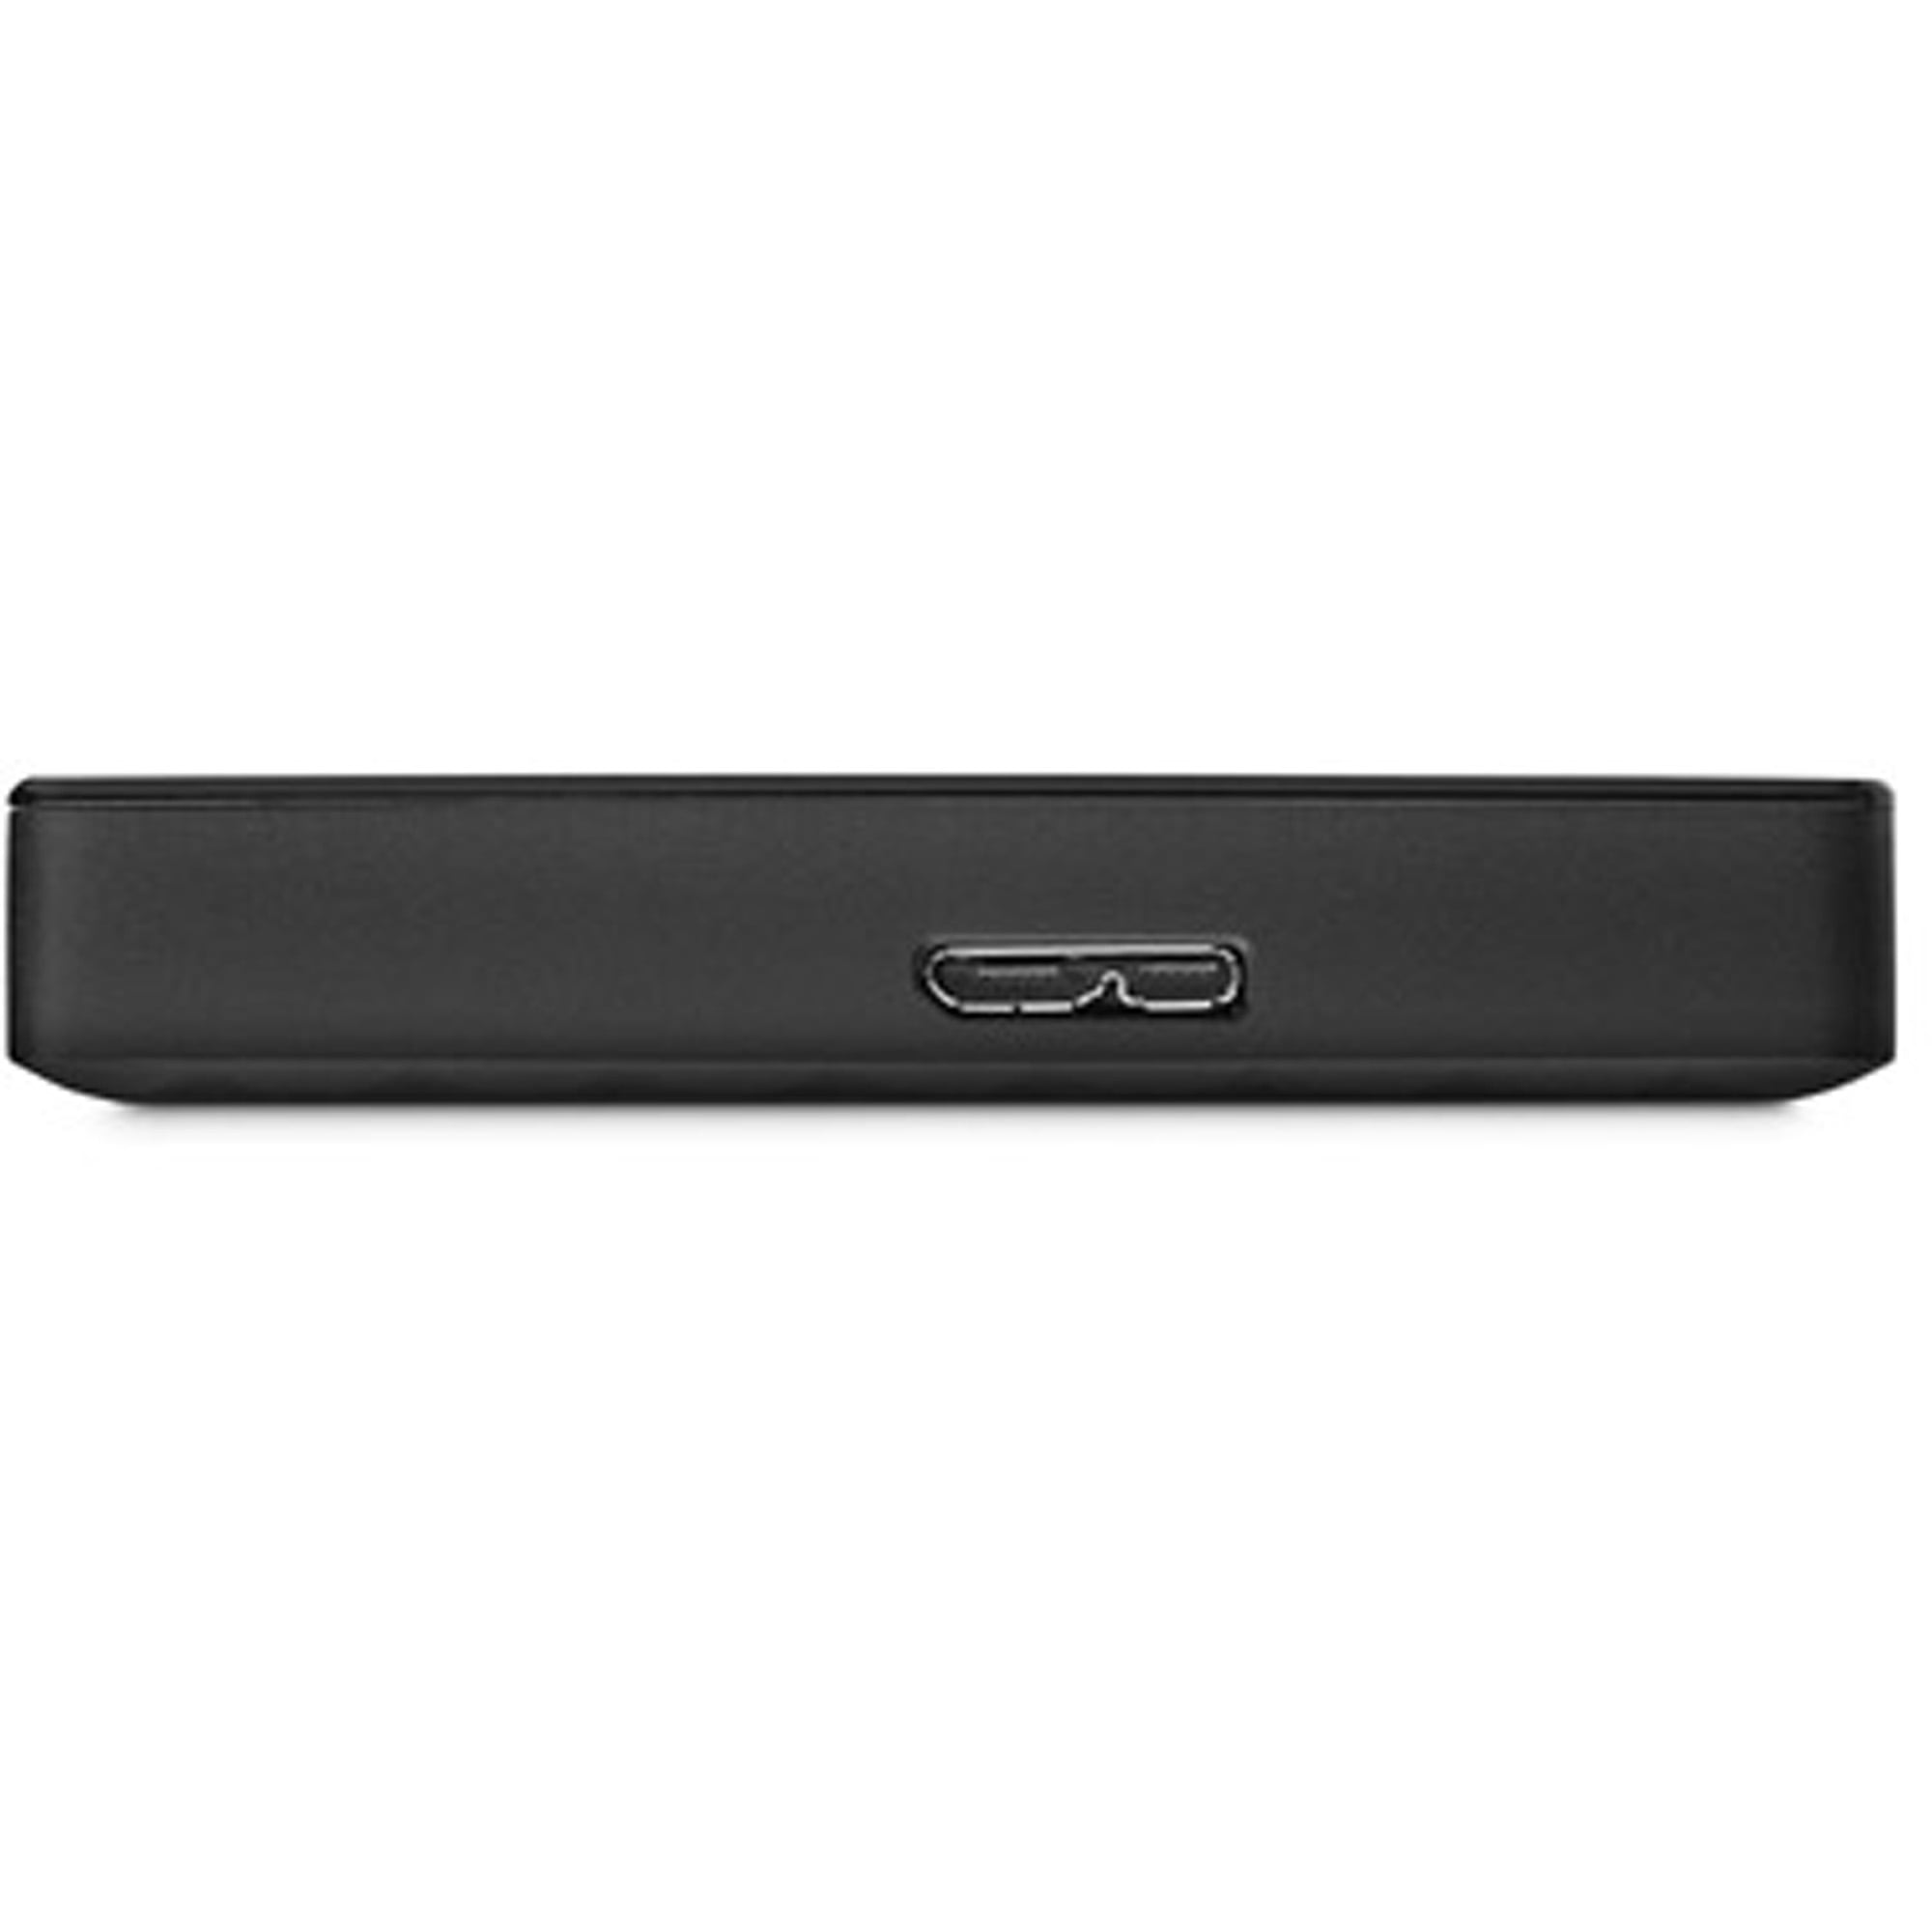 Seagate Expansion 1TB External USB 3.0 Portable Hard Drive Black